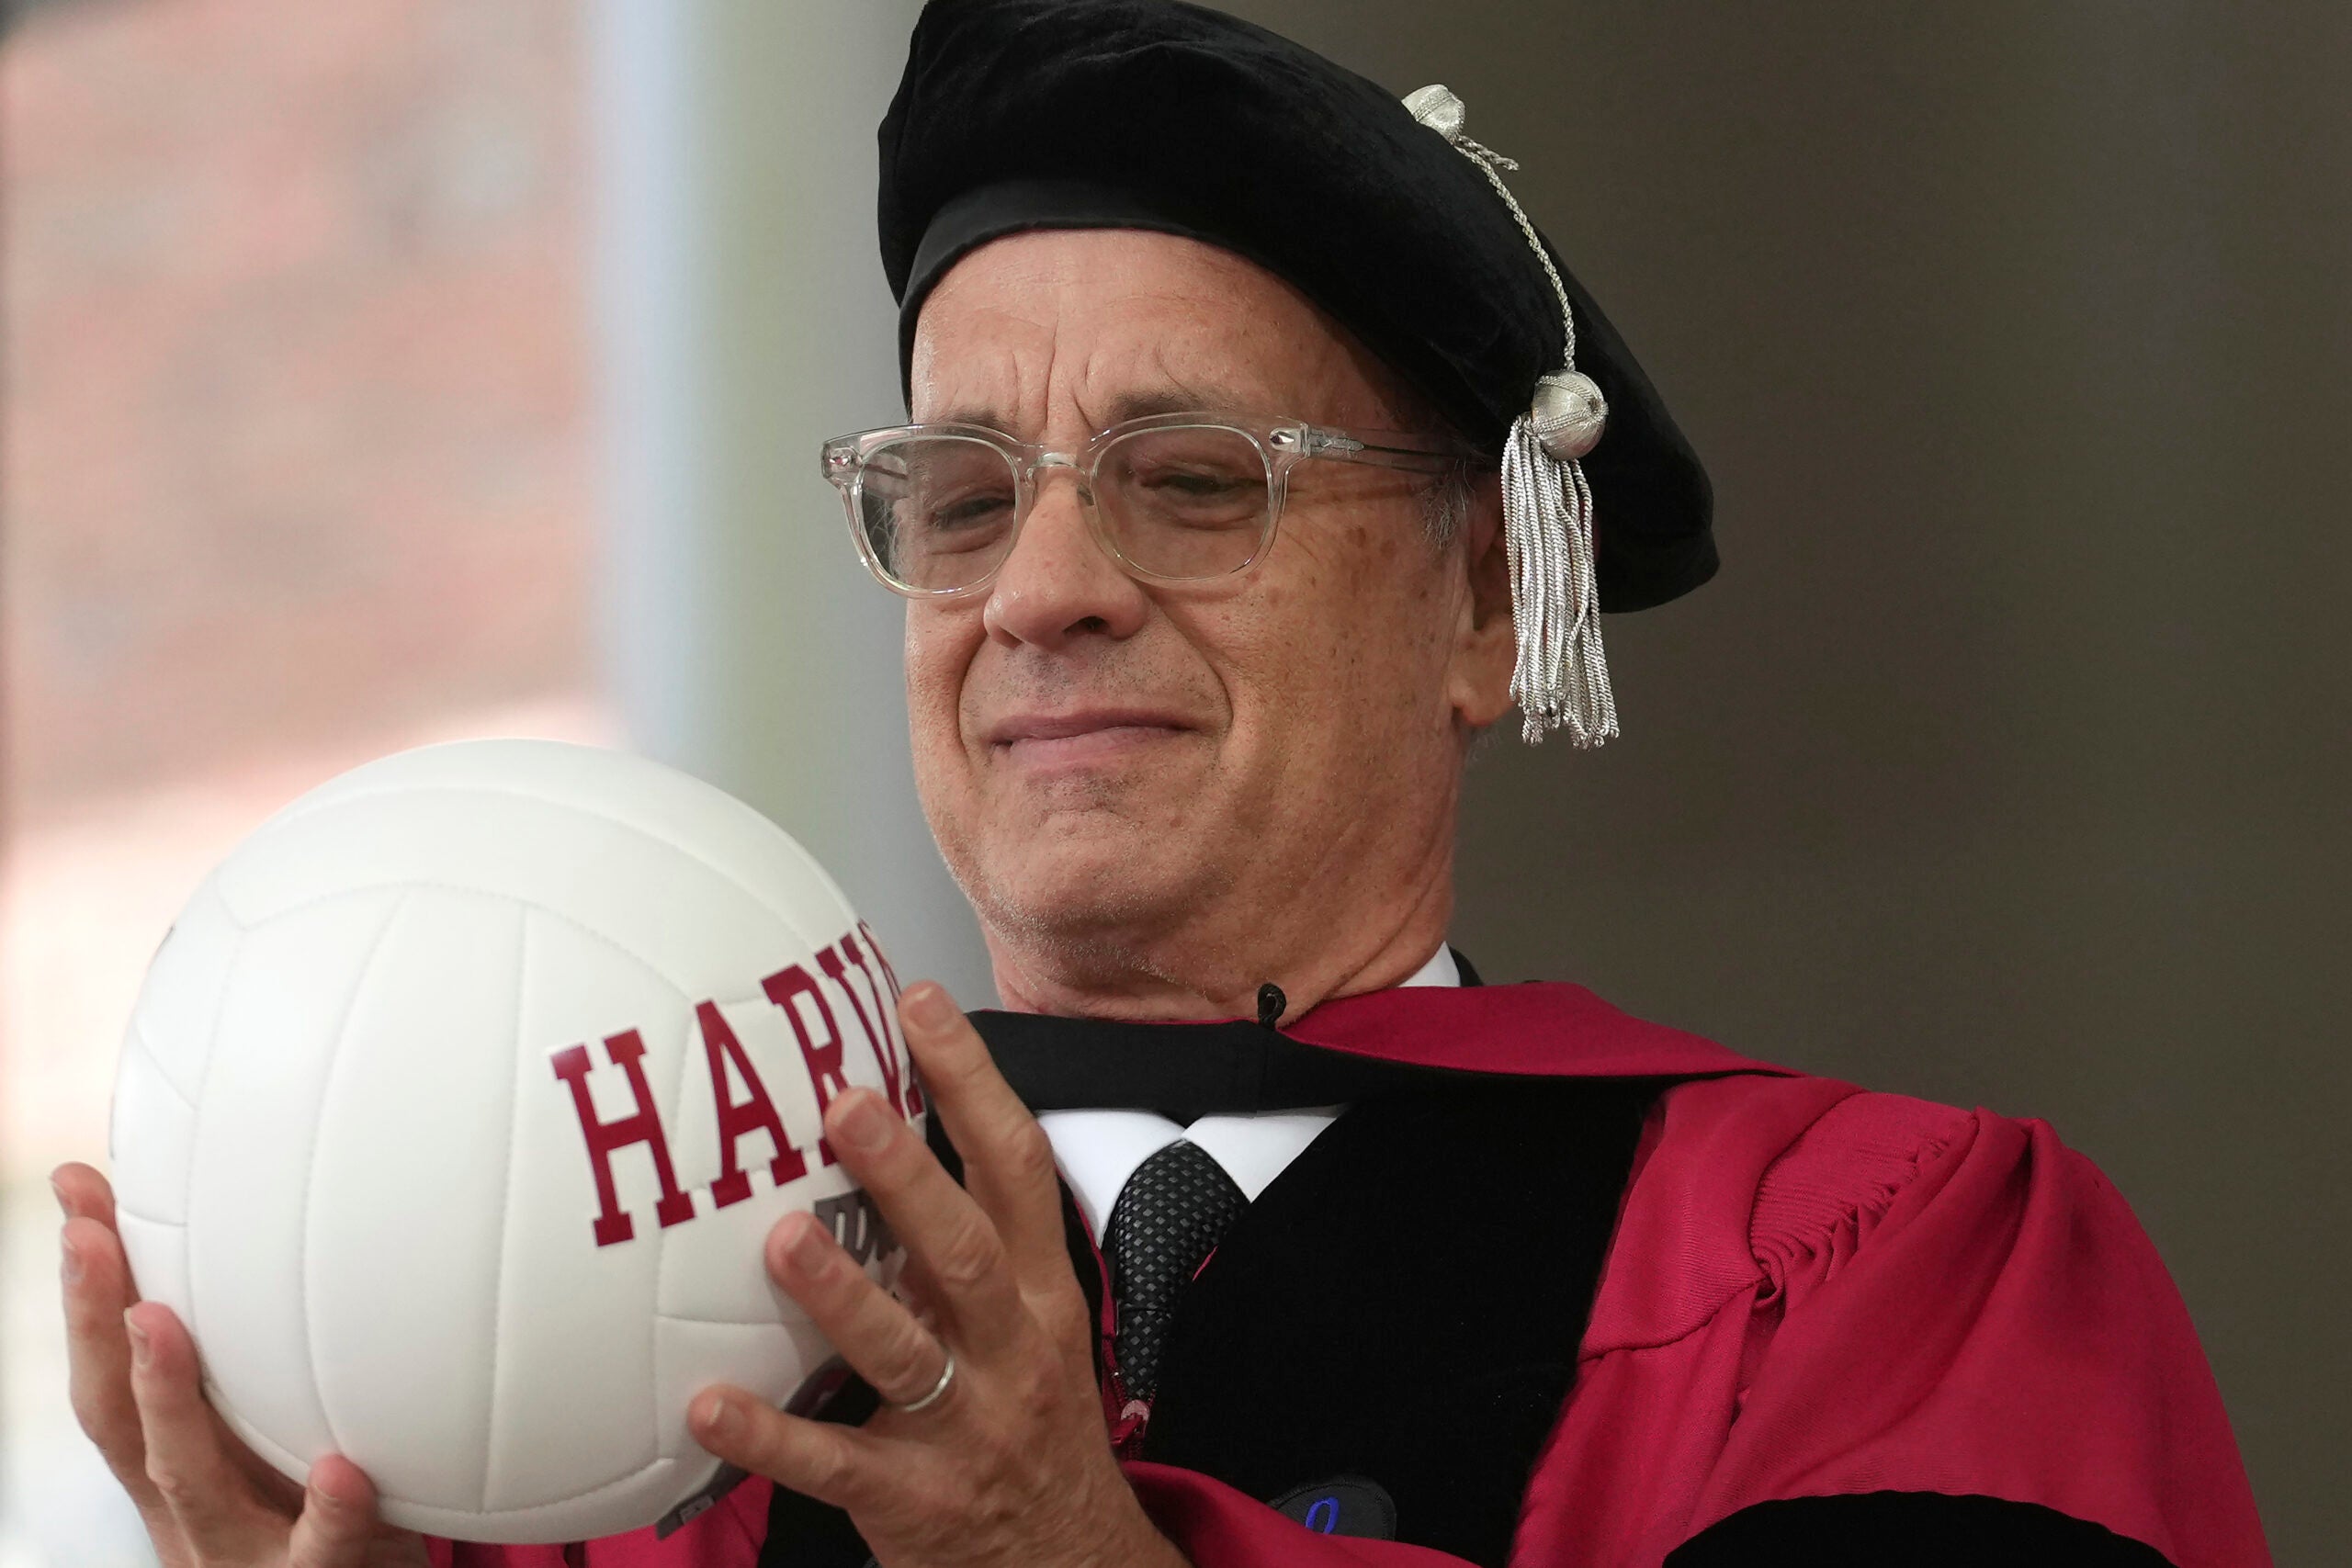 Video Tom Hanks' Harvard commencement speech